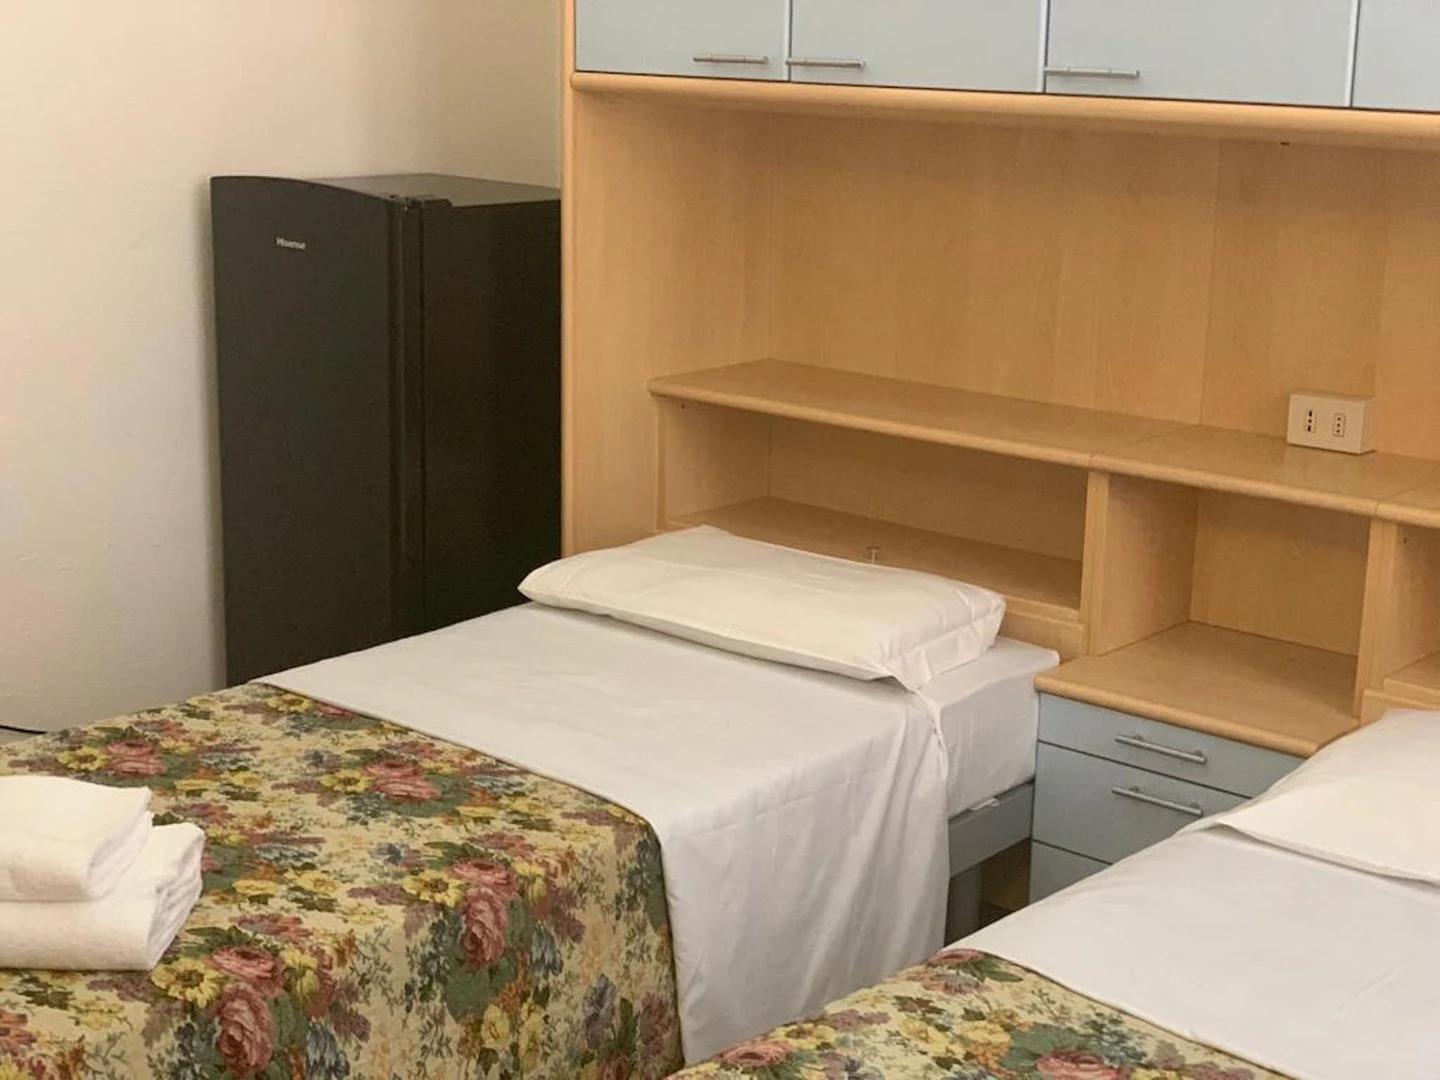 Shared room in 3-bedroom flat Siena